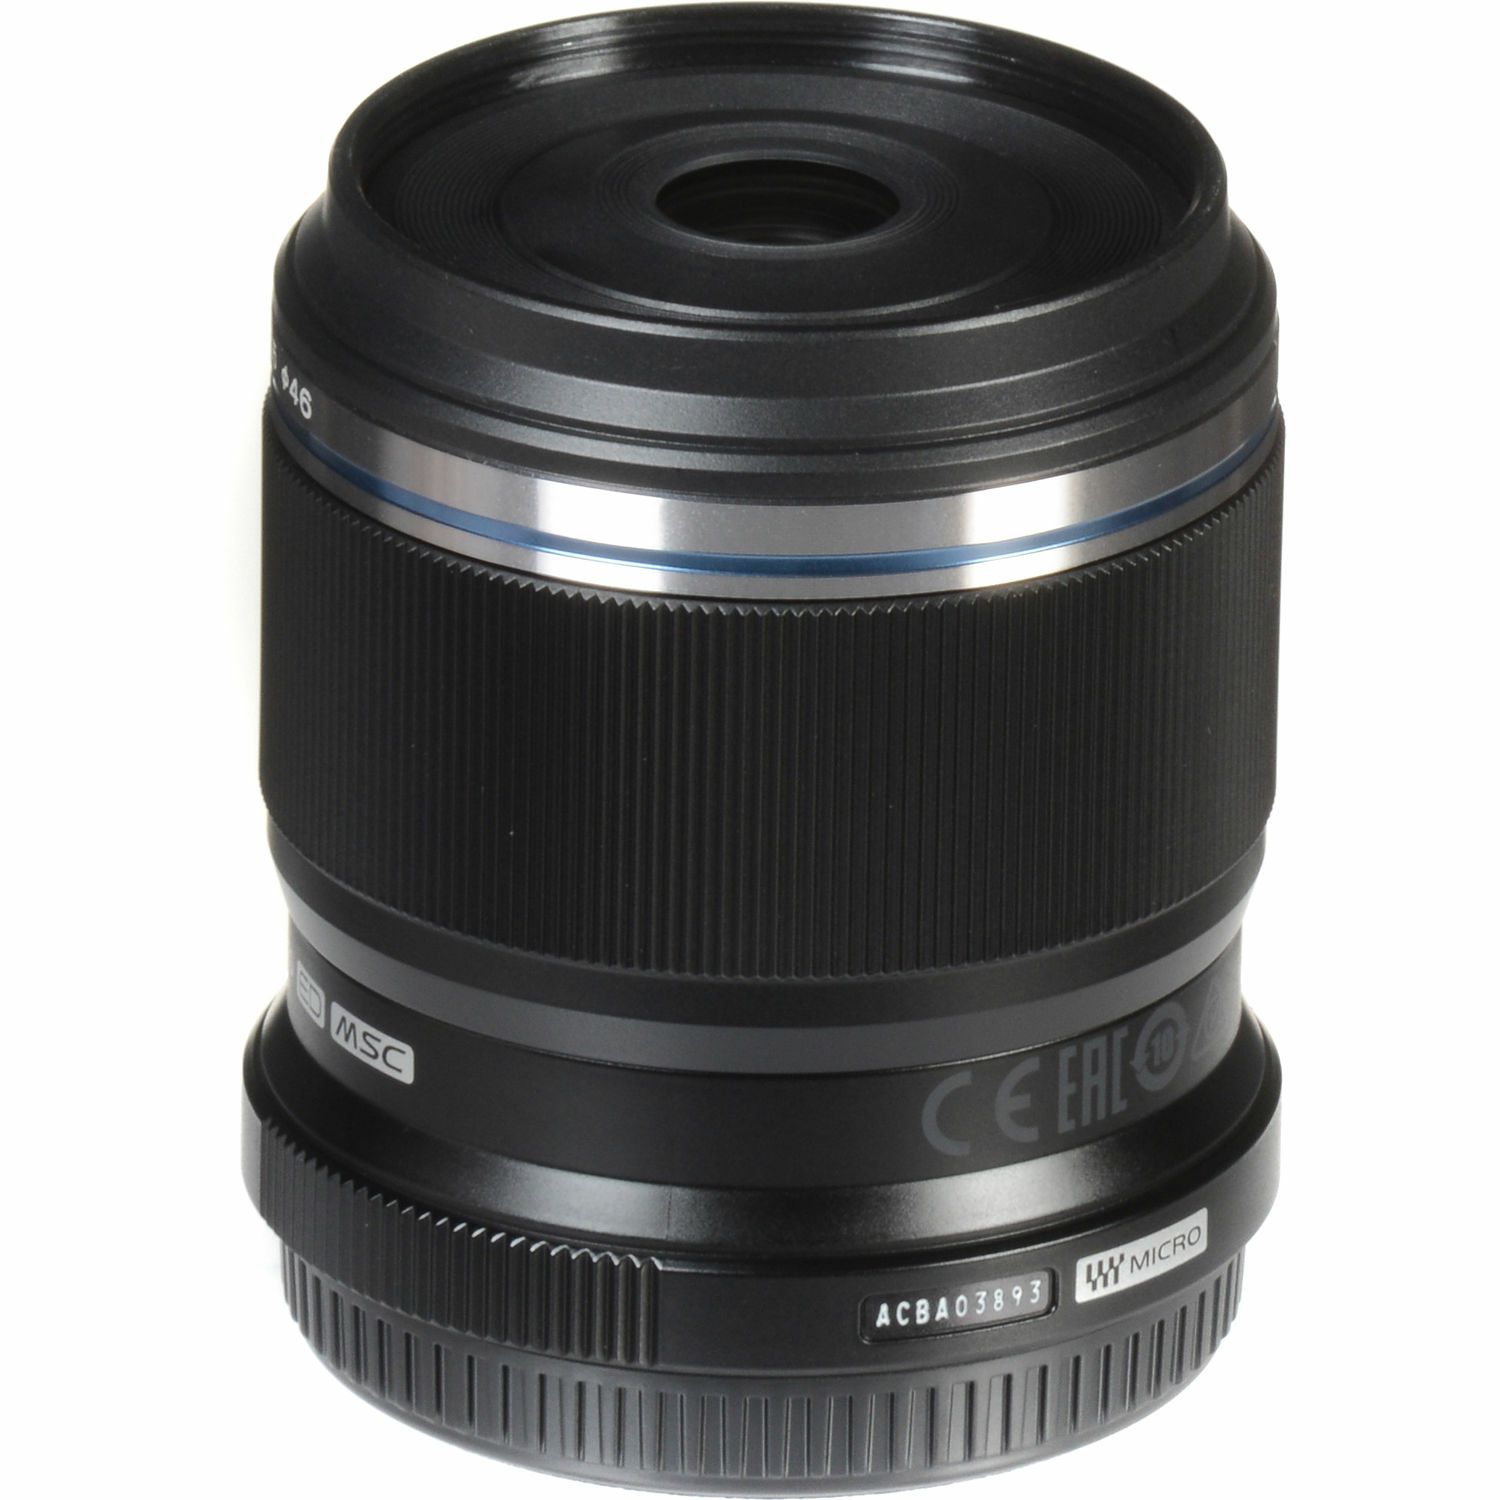 Olympus M. Zuiko Digital 30mm f/3.5 ED Premium macro objektiv fiksne žarišne duljine EM-M3035 BLK 30 1:3.5 prime lens Micro Four Thirds MFT micro4/3" (V312040BW000)